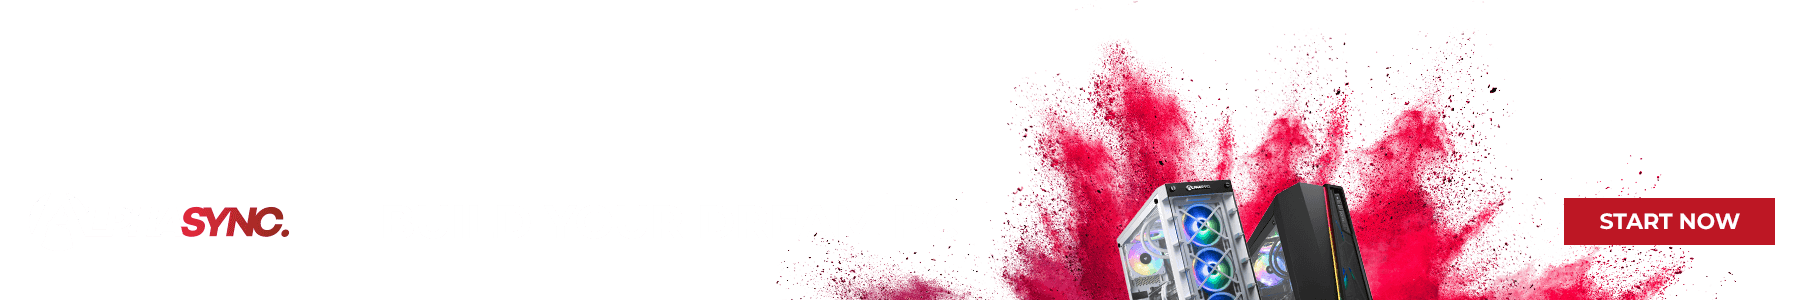 Build your dream Alphasync PC.